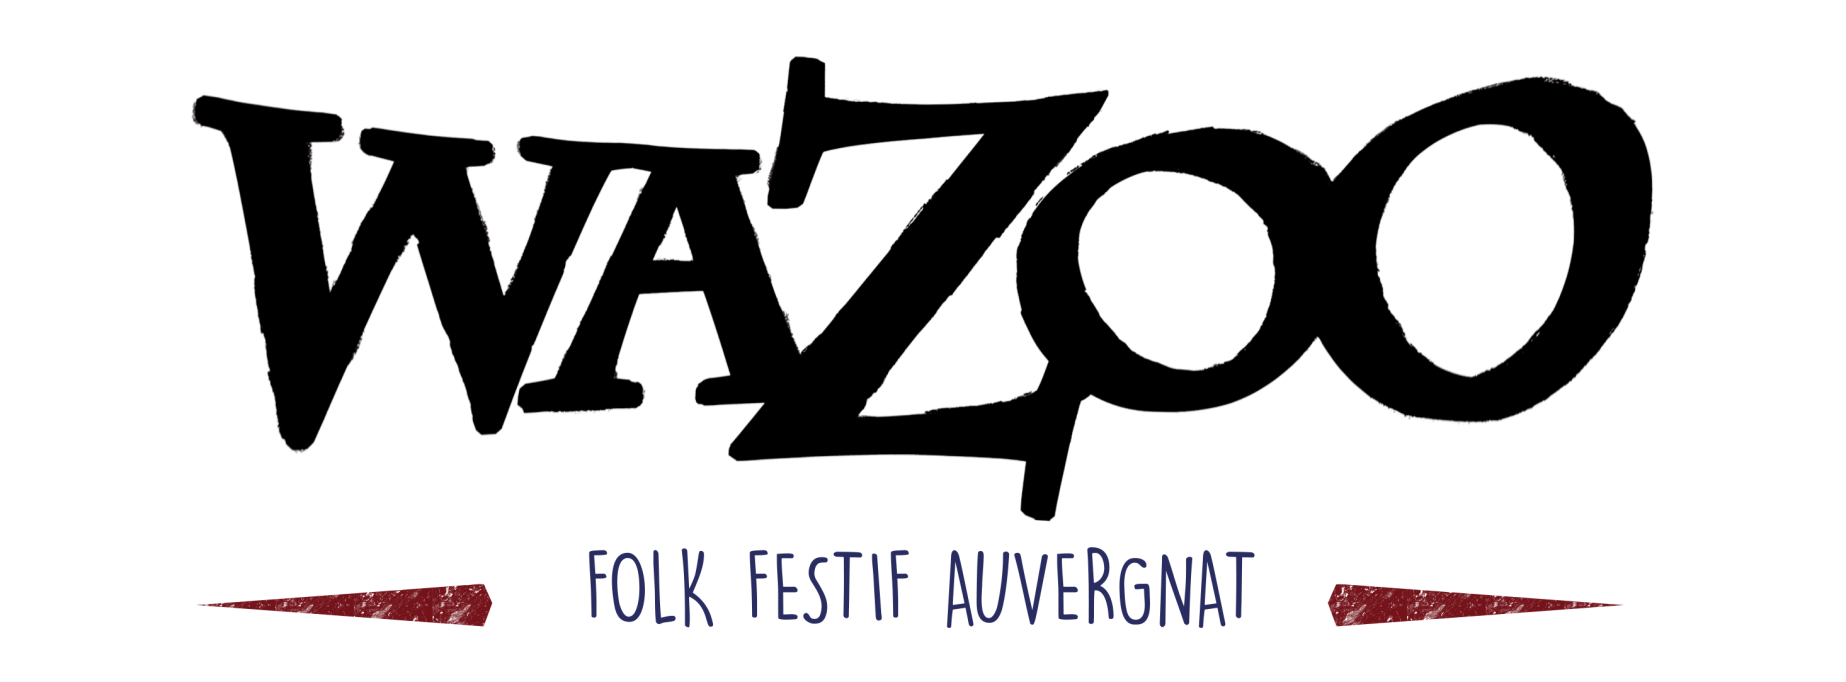 WAZOO - Folk Festif Auvergnat - Agriculteurs